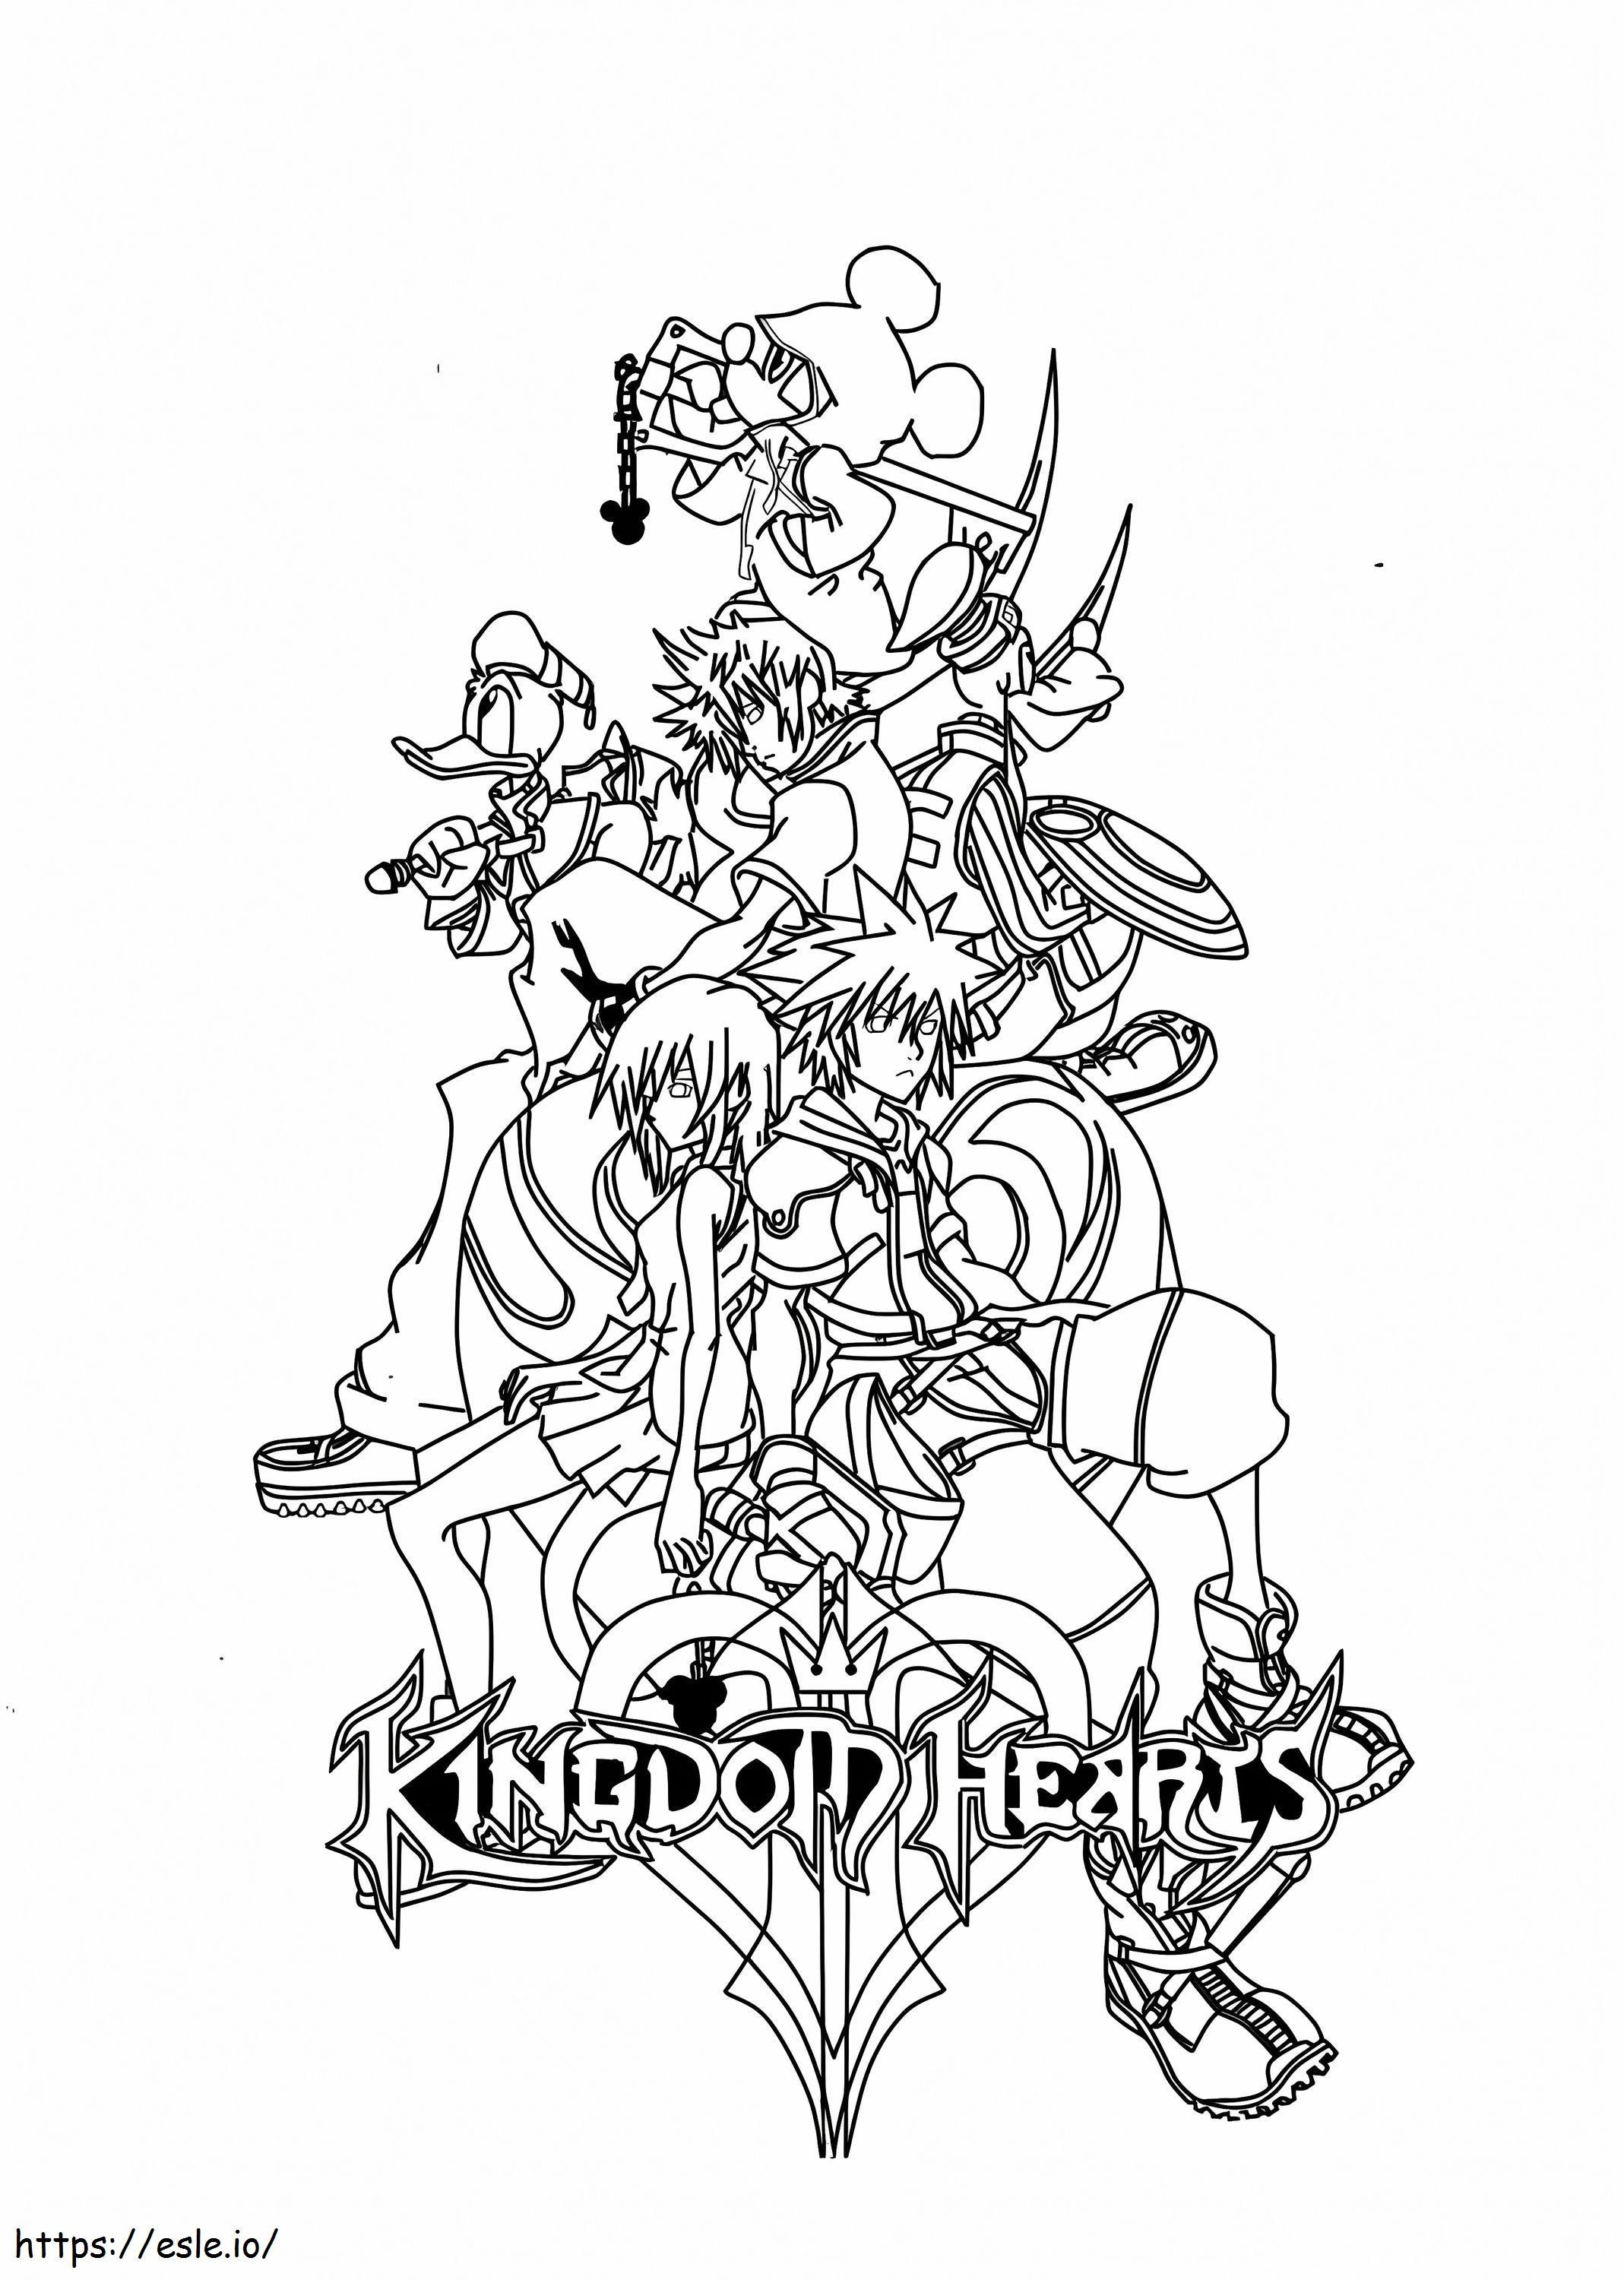 Personaje din Kingdom Hearts de colorat